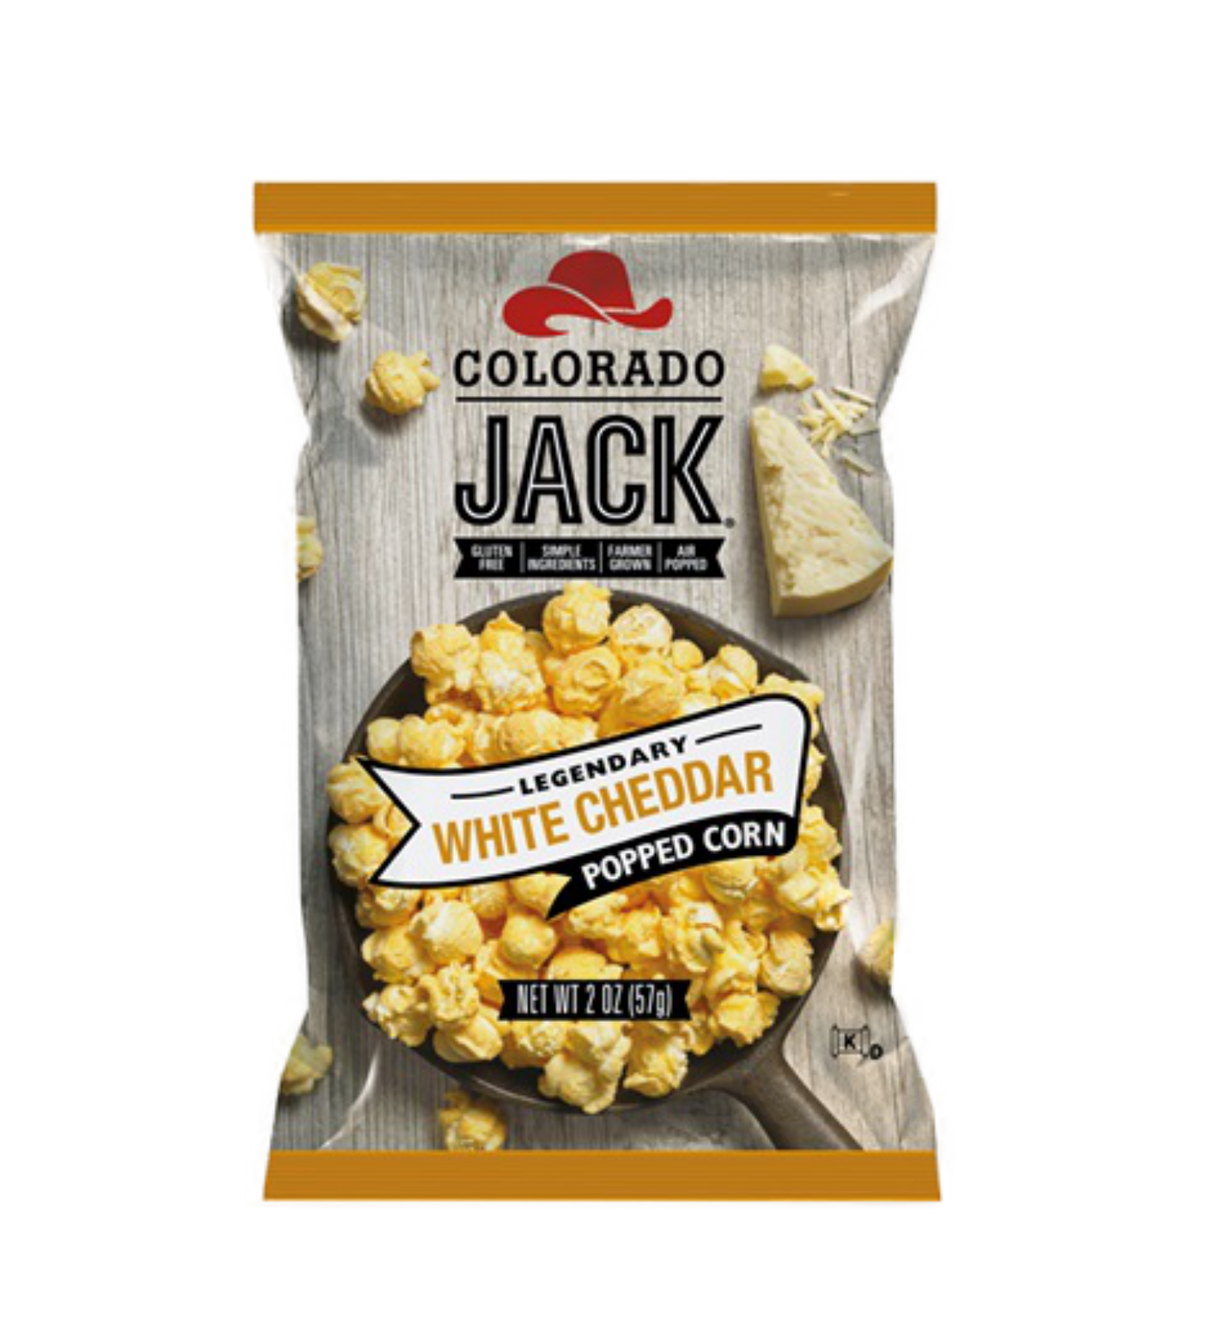 Colorado Jack White Cheddar USA Popcorn 2oz - 6 Count *05/08/24 DATED*